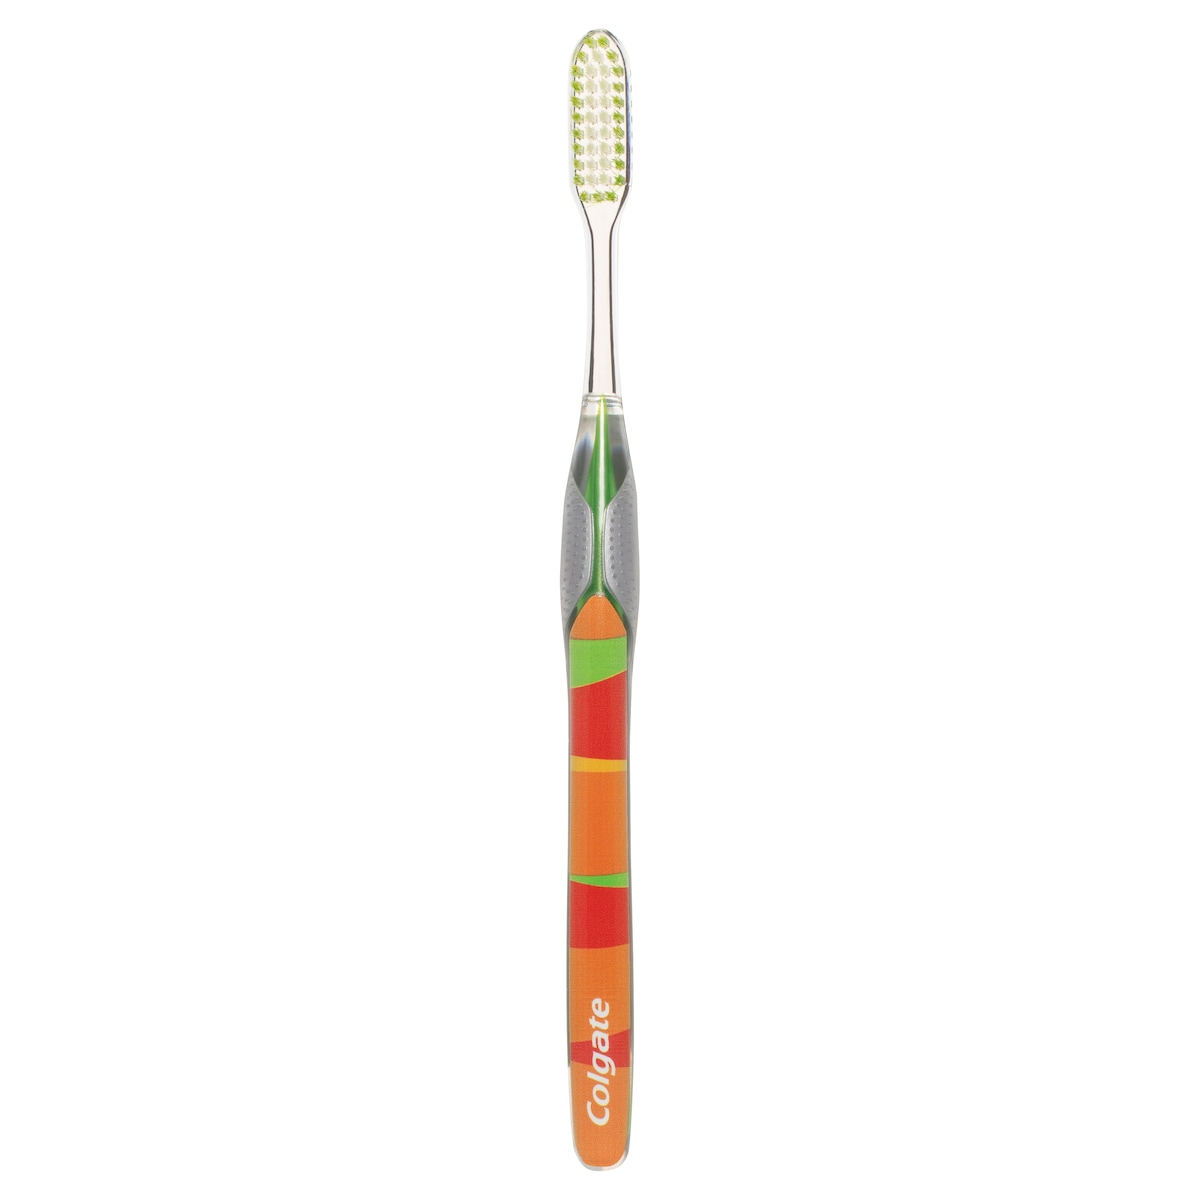 Colgate Slimsoft Advanced Ultra-Soft Toothbrush 3 Pack